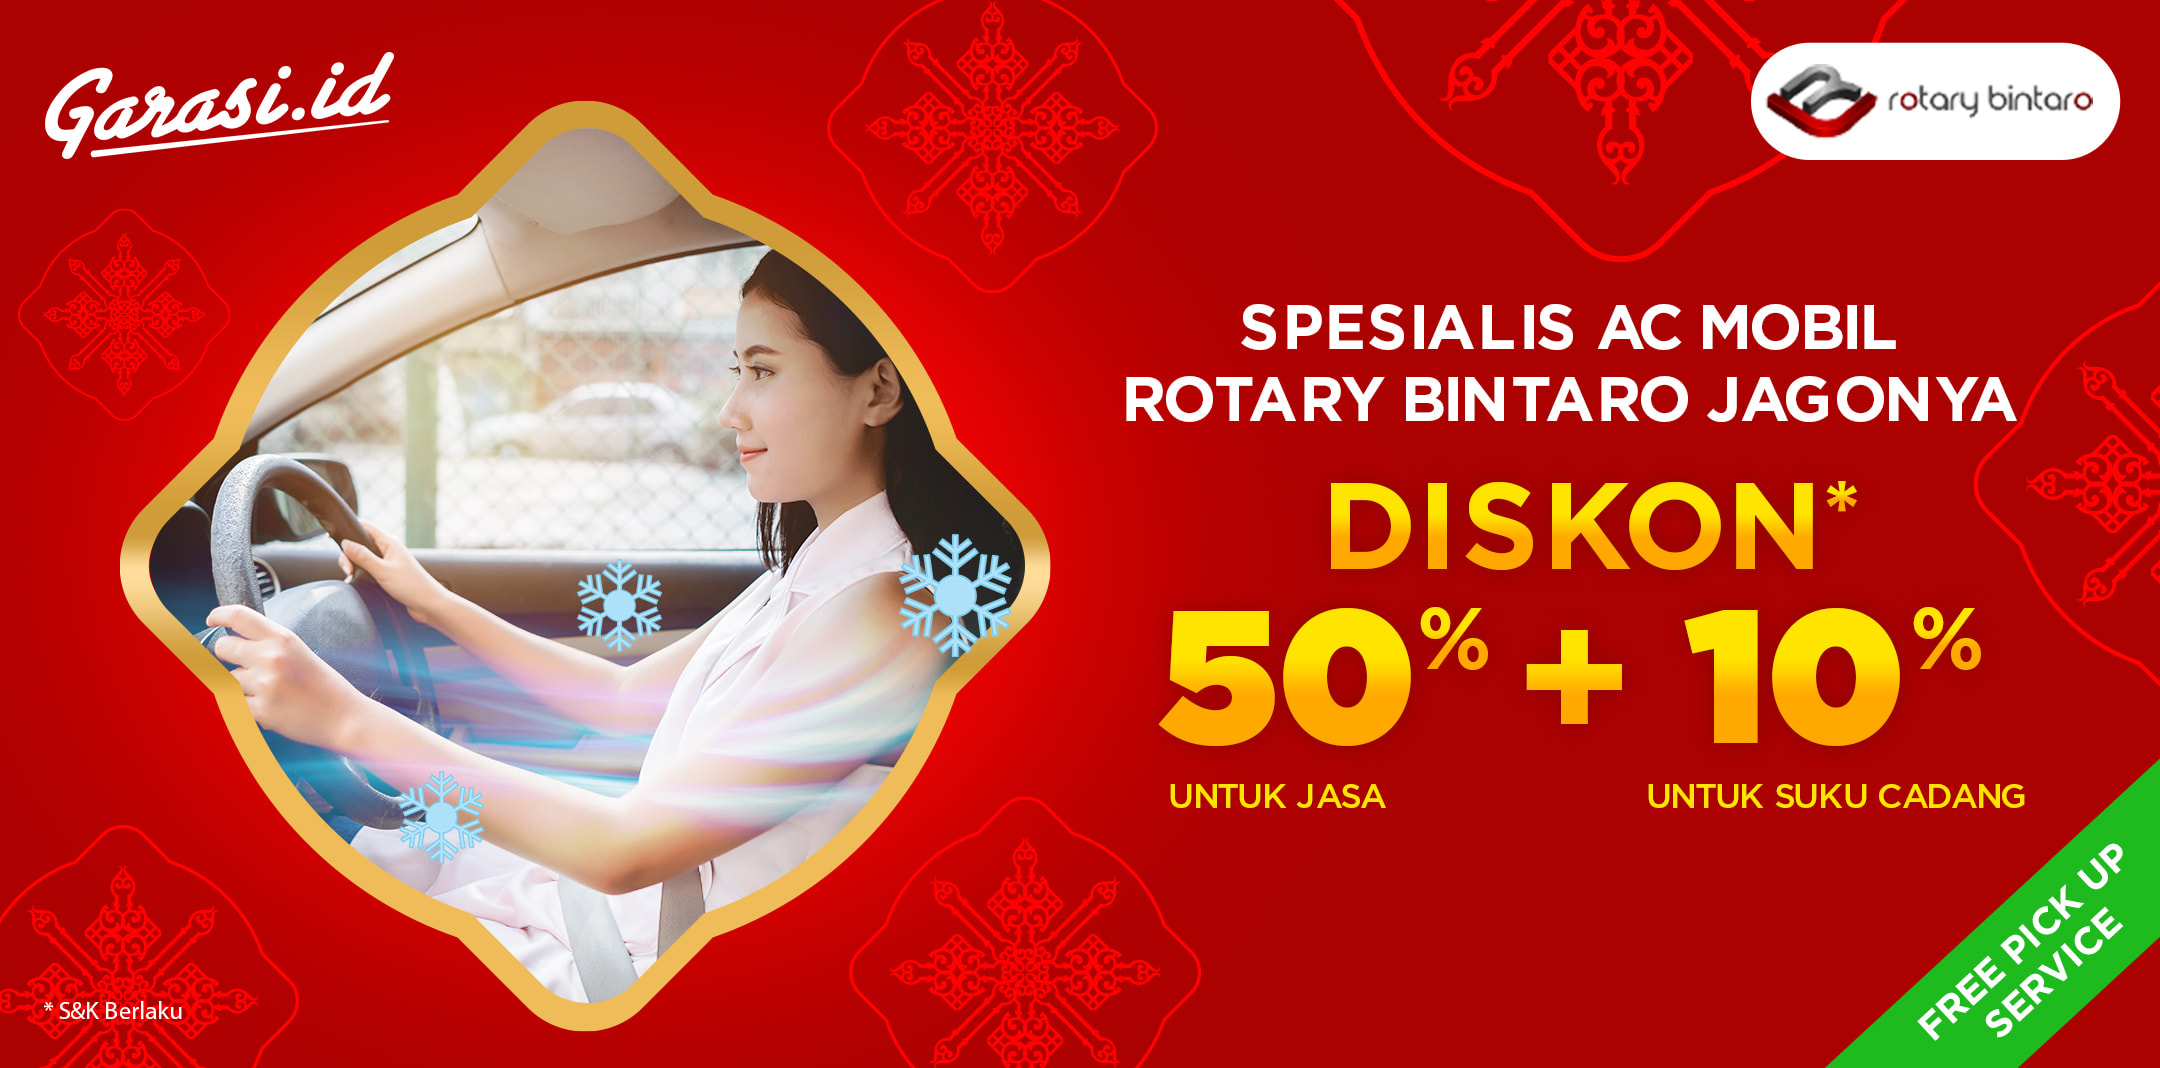 Semua service Rotary Diskon 50% jasa + 10% Sparepart